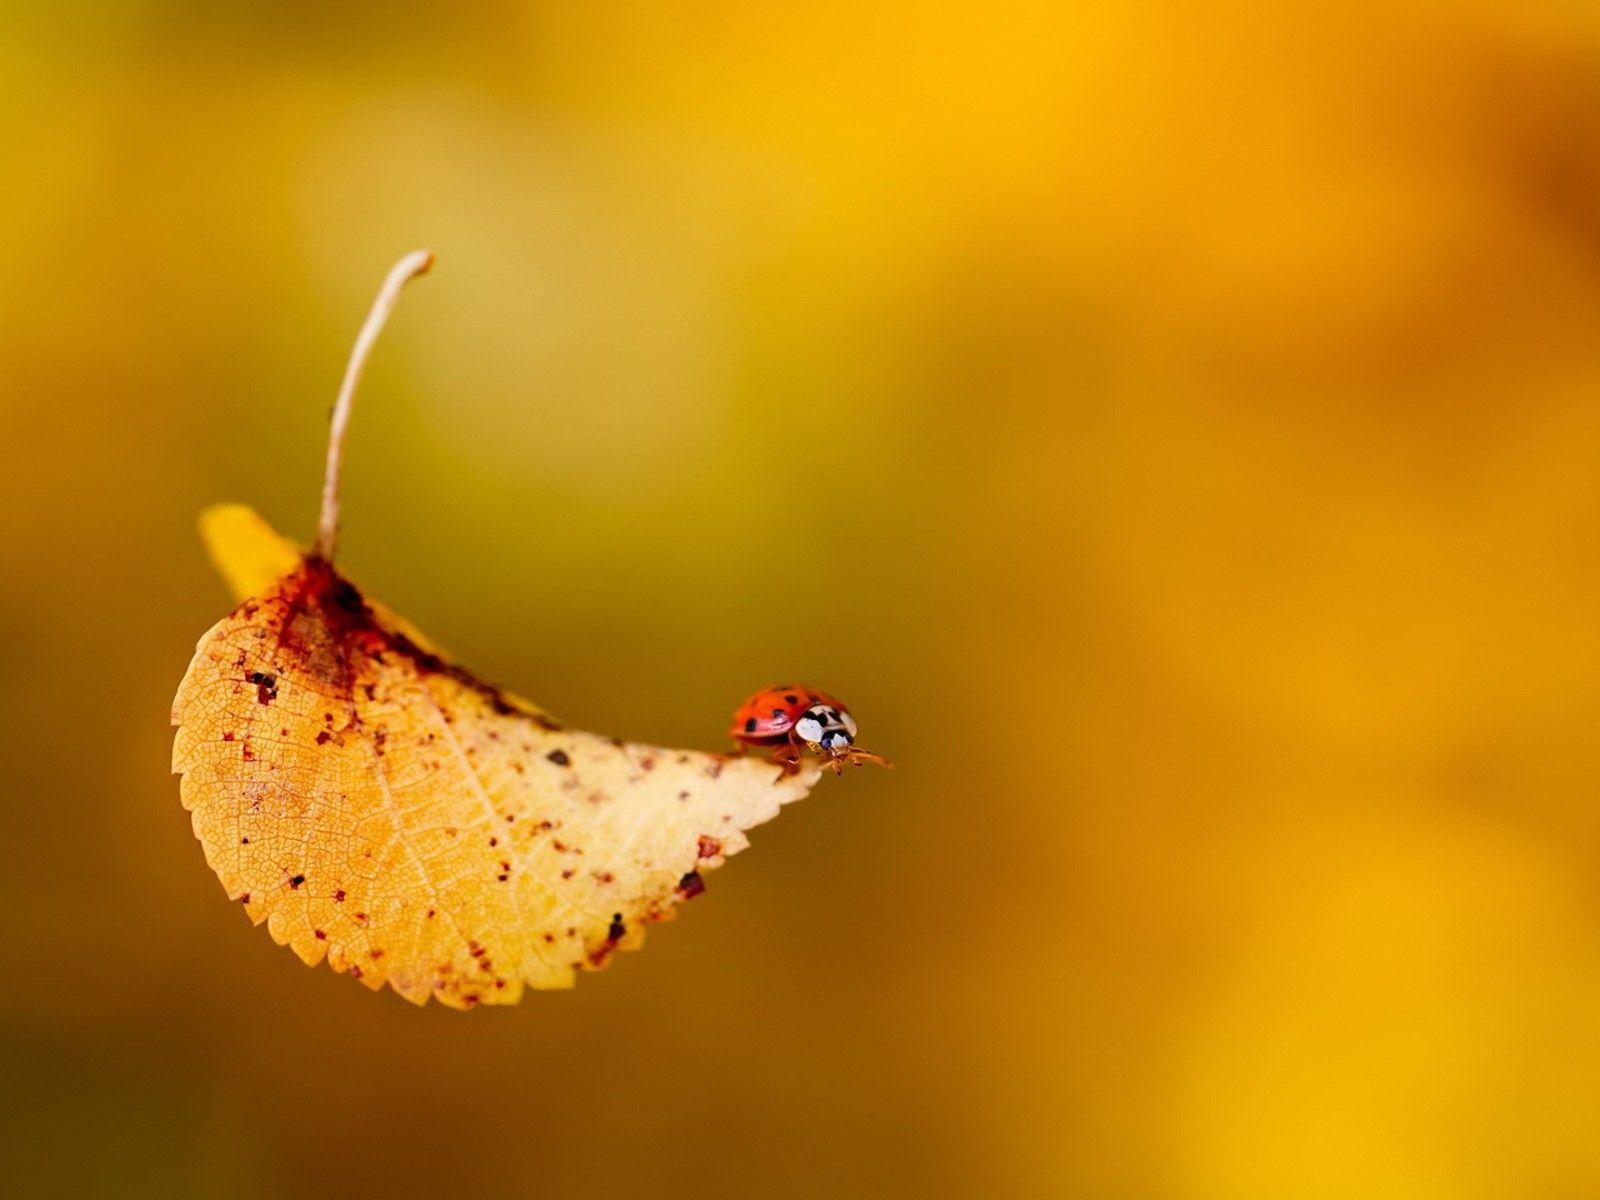 Ladybug on fall leaf wallpaper. PC